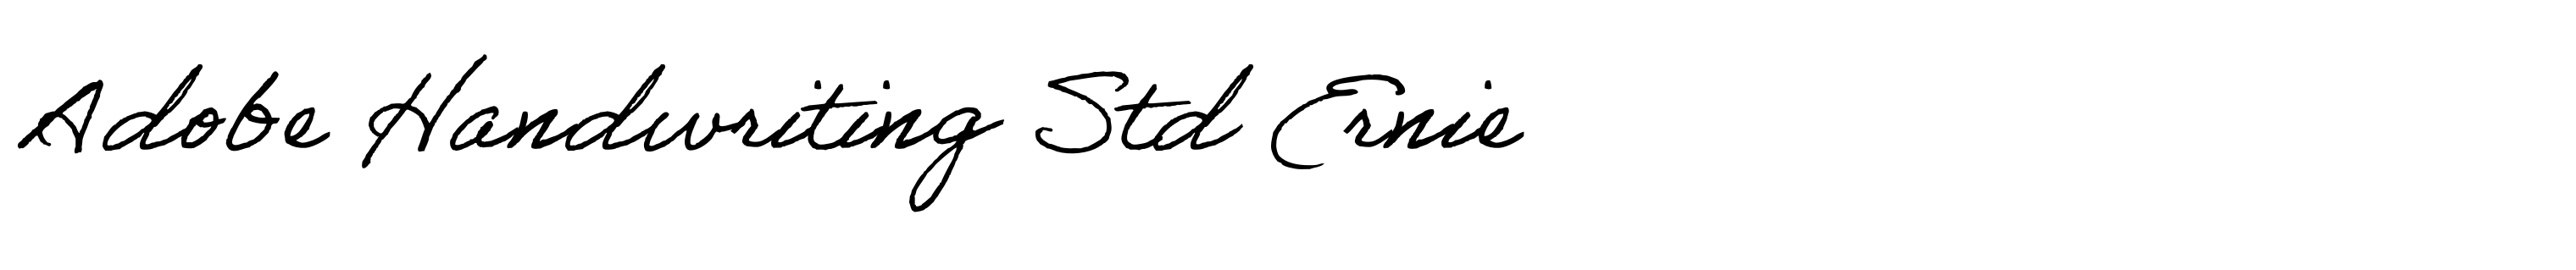 Adobe Handwriting Std Ernie